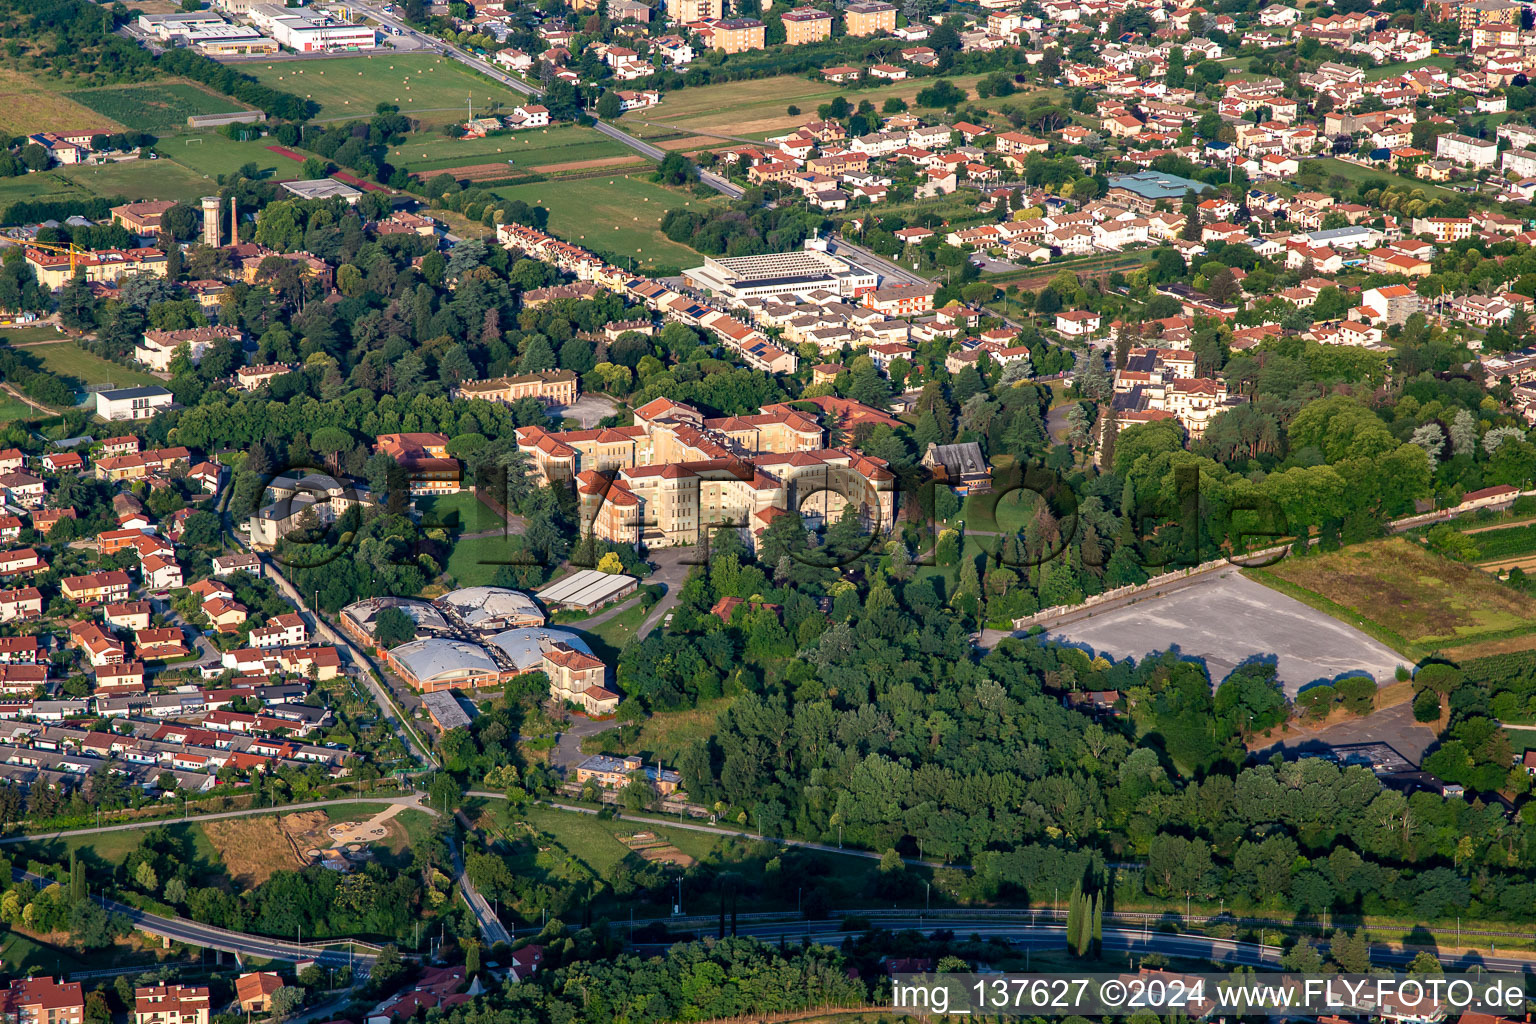 Luftbild von Krankenhaus Ospedale Civile in Gorizia, Italien